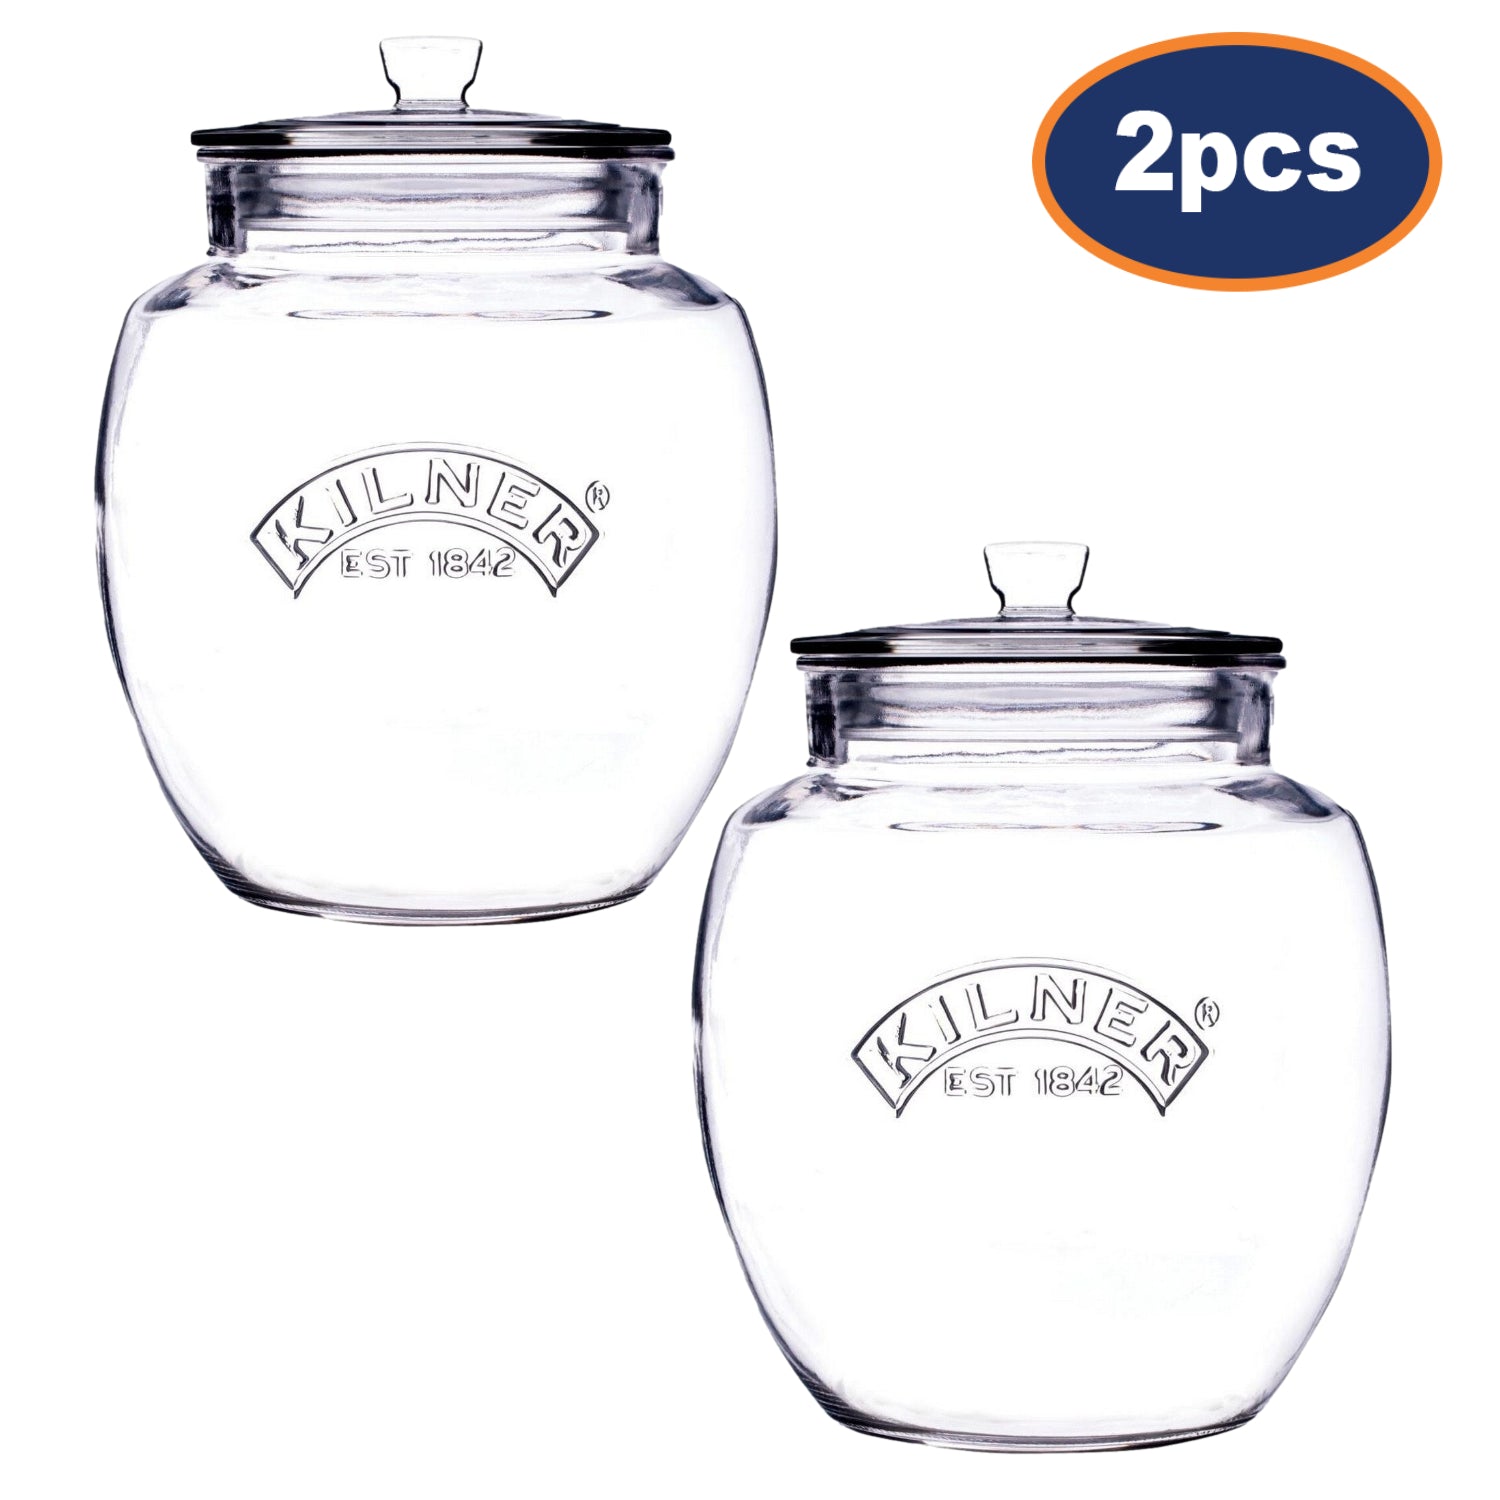 2Pcs 2L Kilner Storage Jar